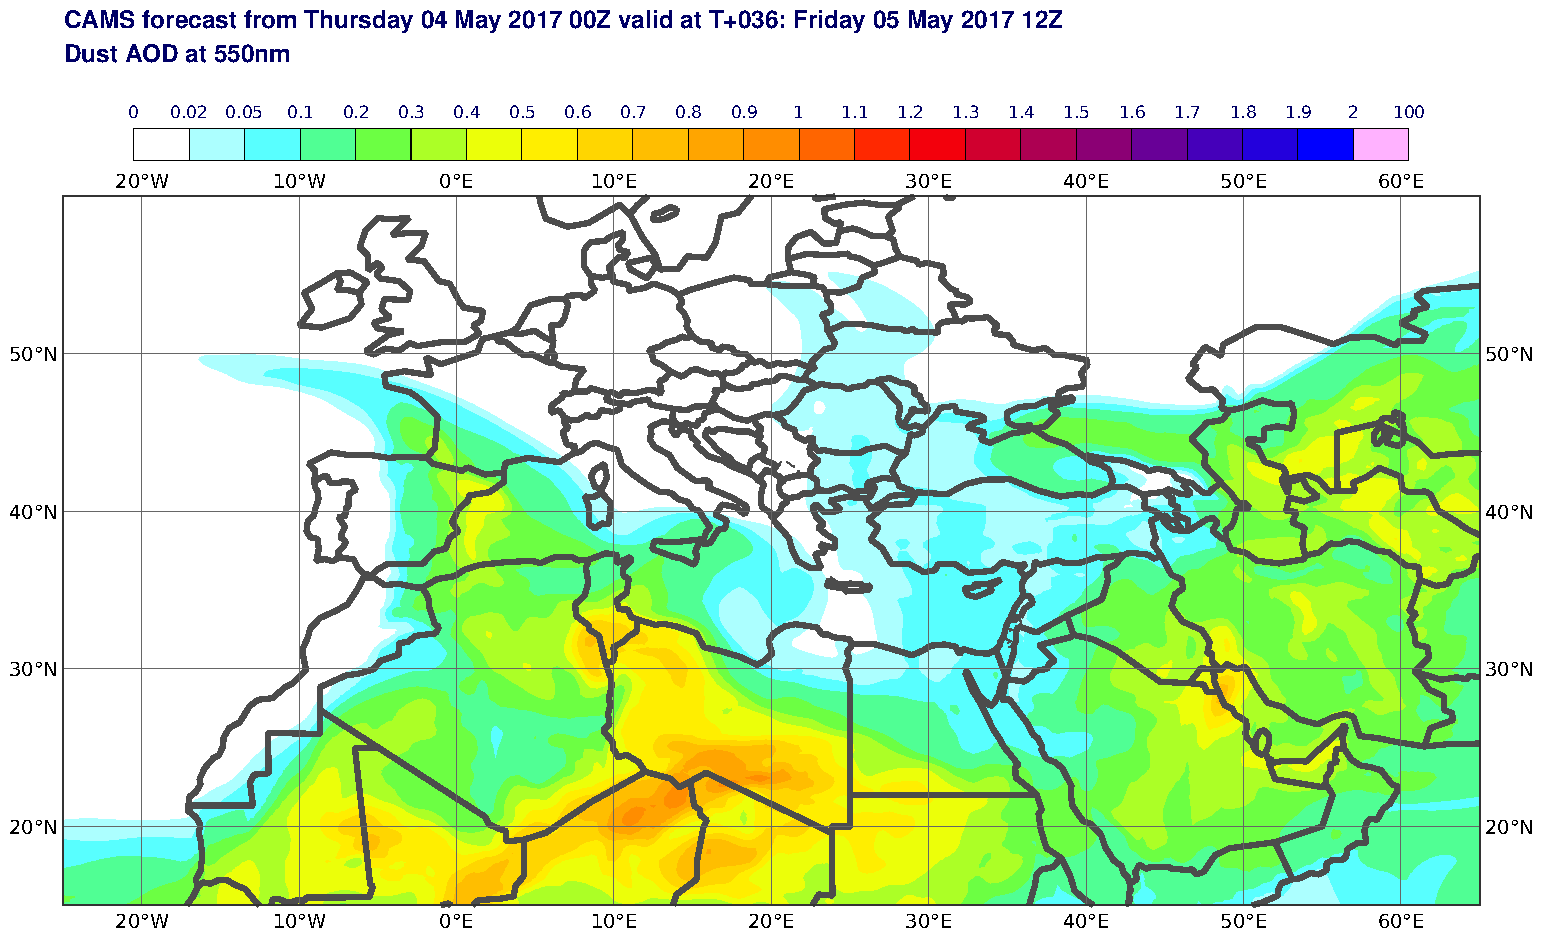 Dust AOD at 550nm valid at T36 - 2017-05-05 12:00